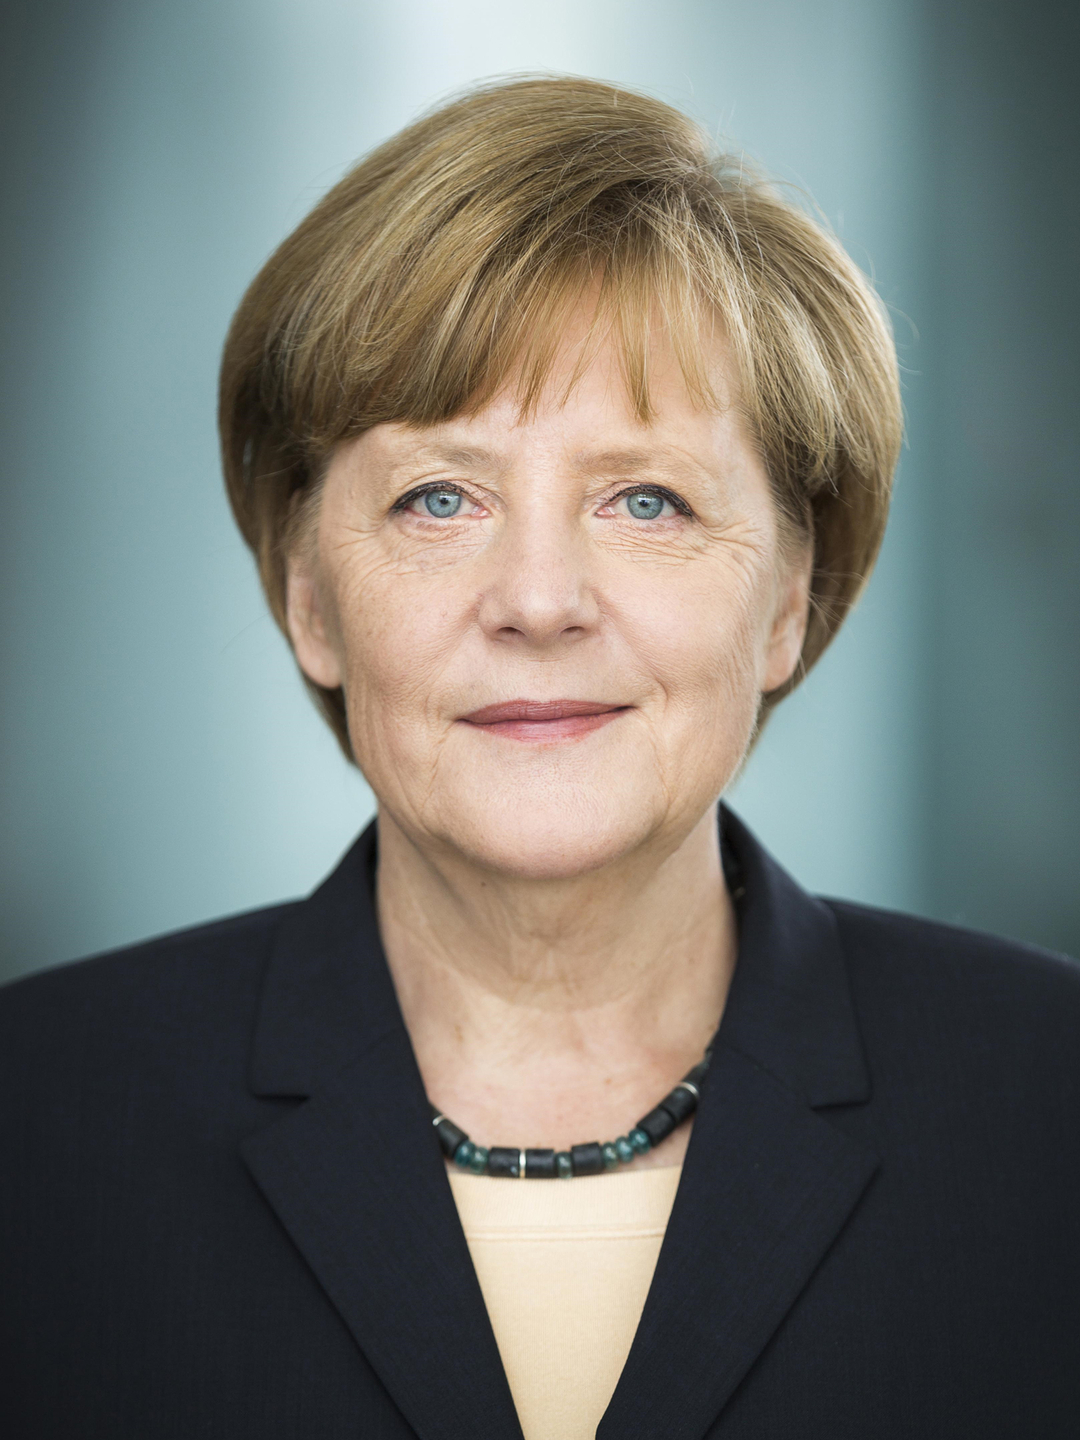 Angela Merkel how did she became famous